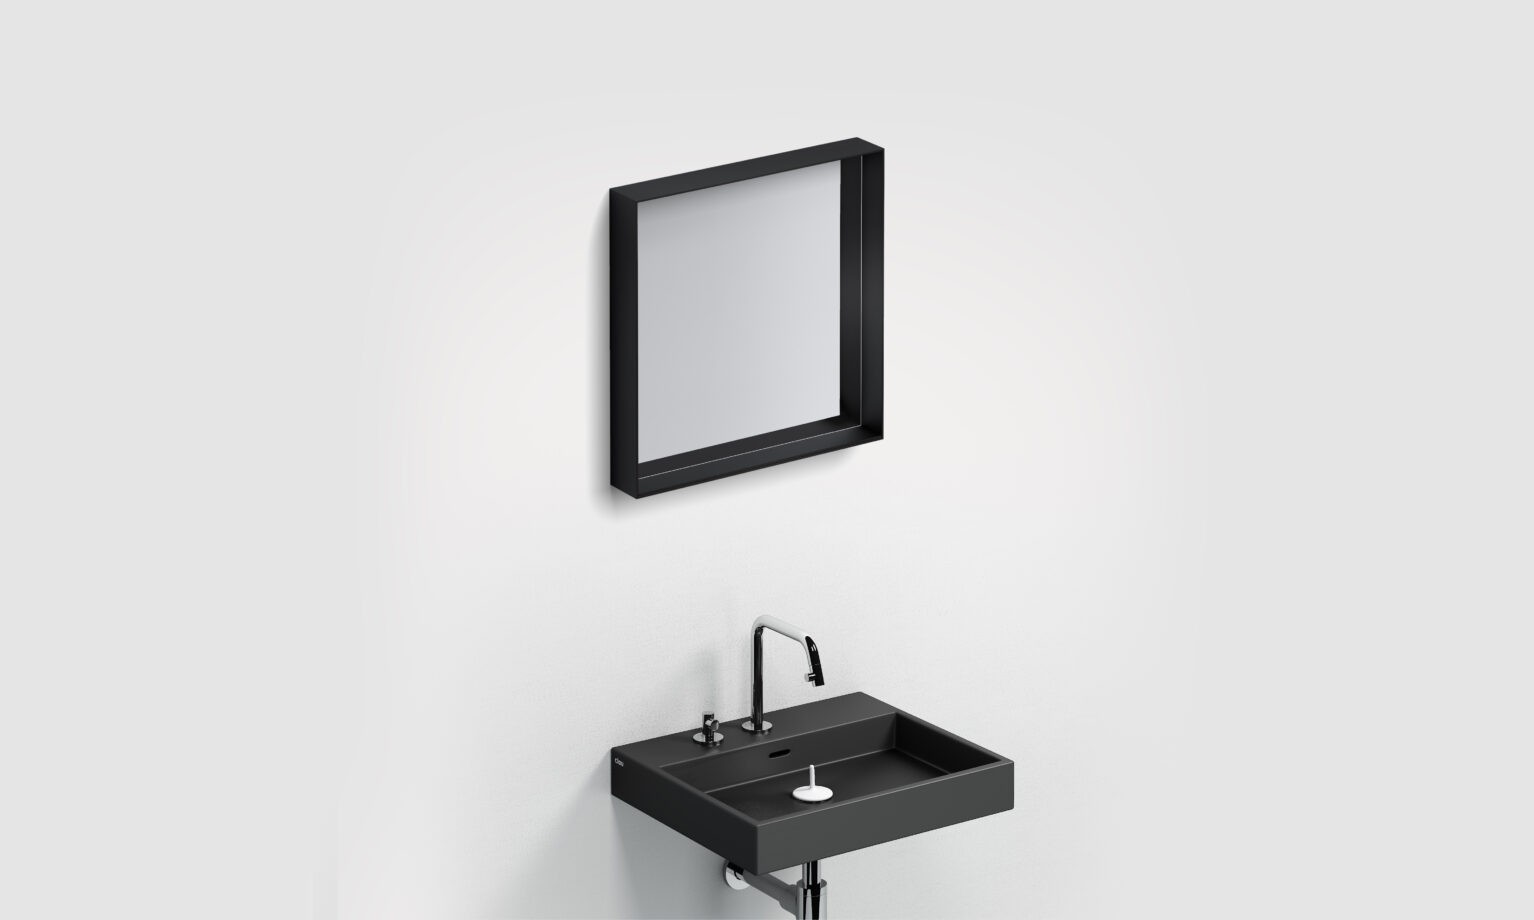 Spiegel-met-ophangsysteem-glazen-planchet-rechthoekig-50cm-50cm-zwart-toilet-badkamer-luxe-sanitair-Flat-clou-CL080805021